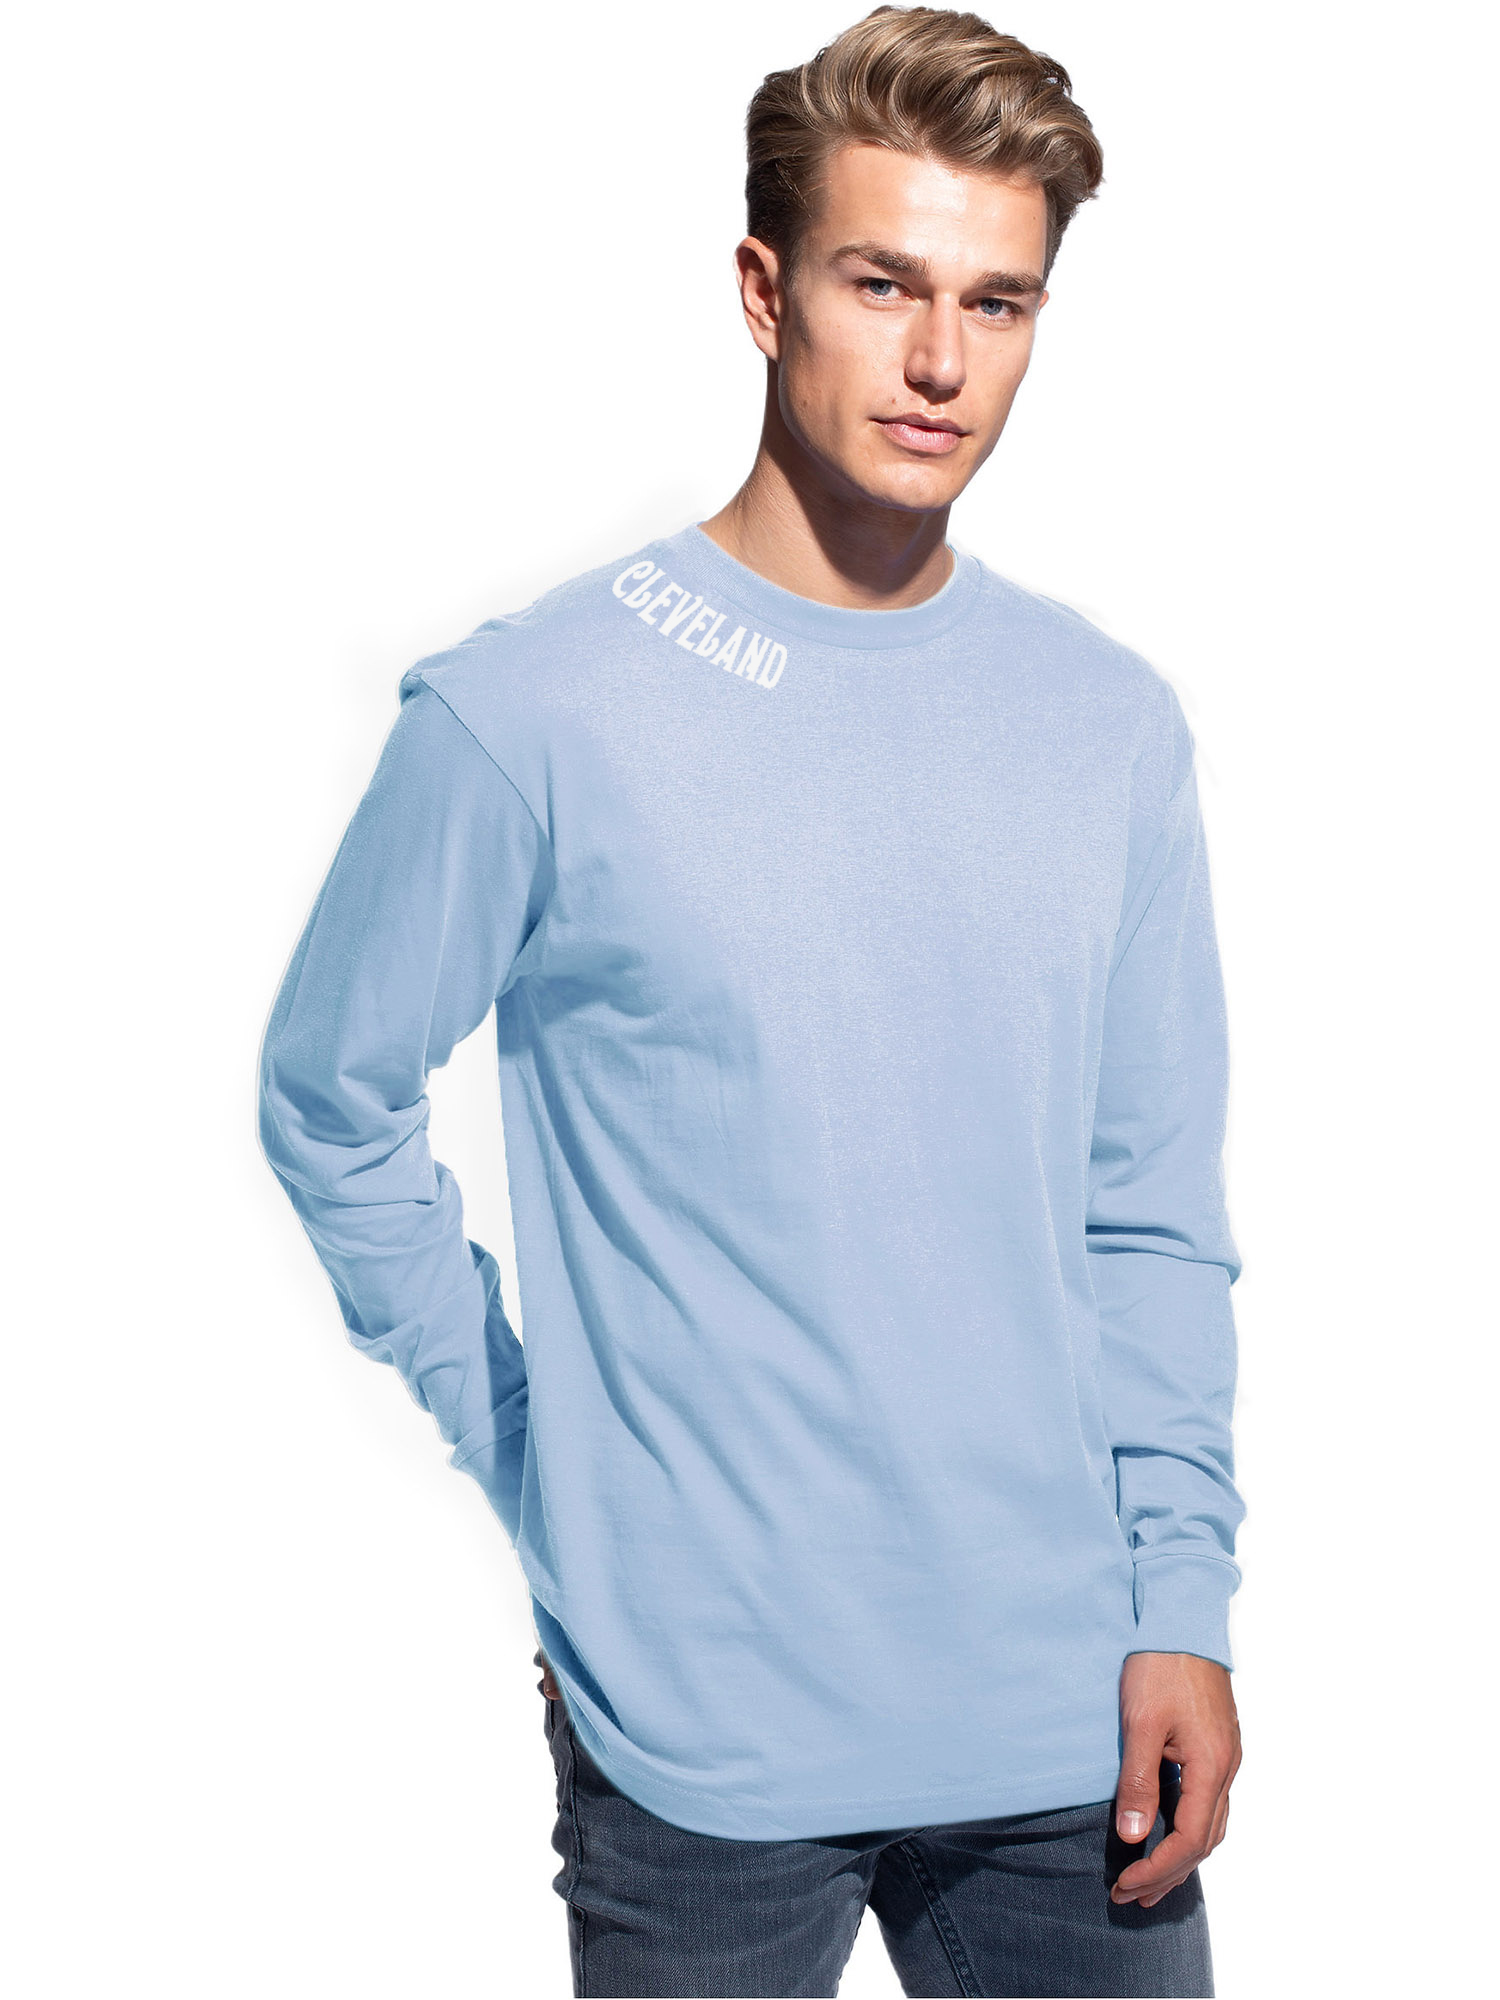 Daxton Premium Cleveland Men Long Sleeves T Shirt Ultra Soft Medium Weight Cotton, Light Blue Tee White Letters Medium - image 1 of 3